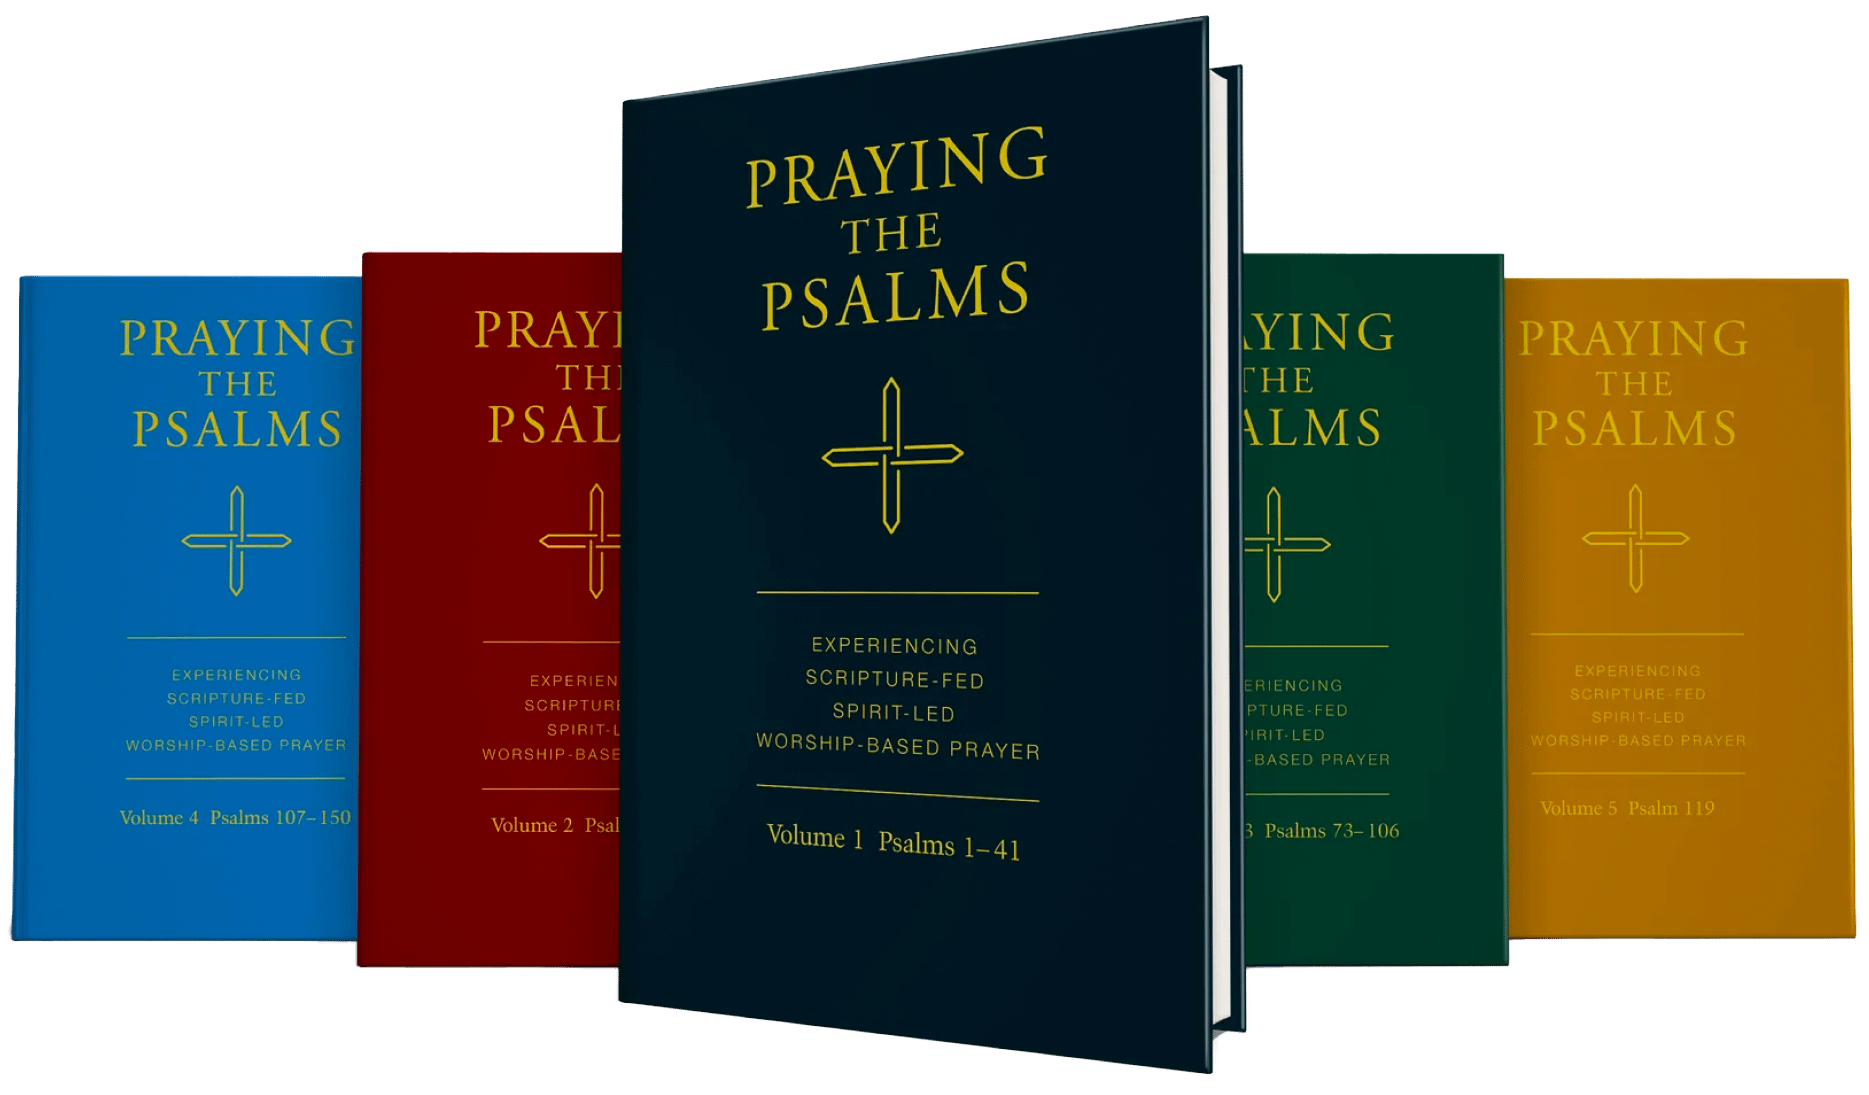 Praying the Psalms book series